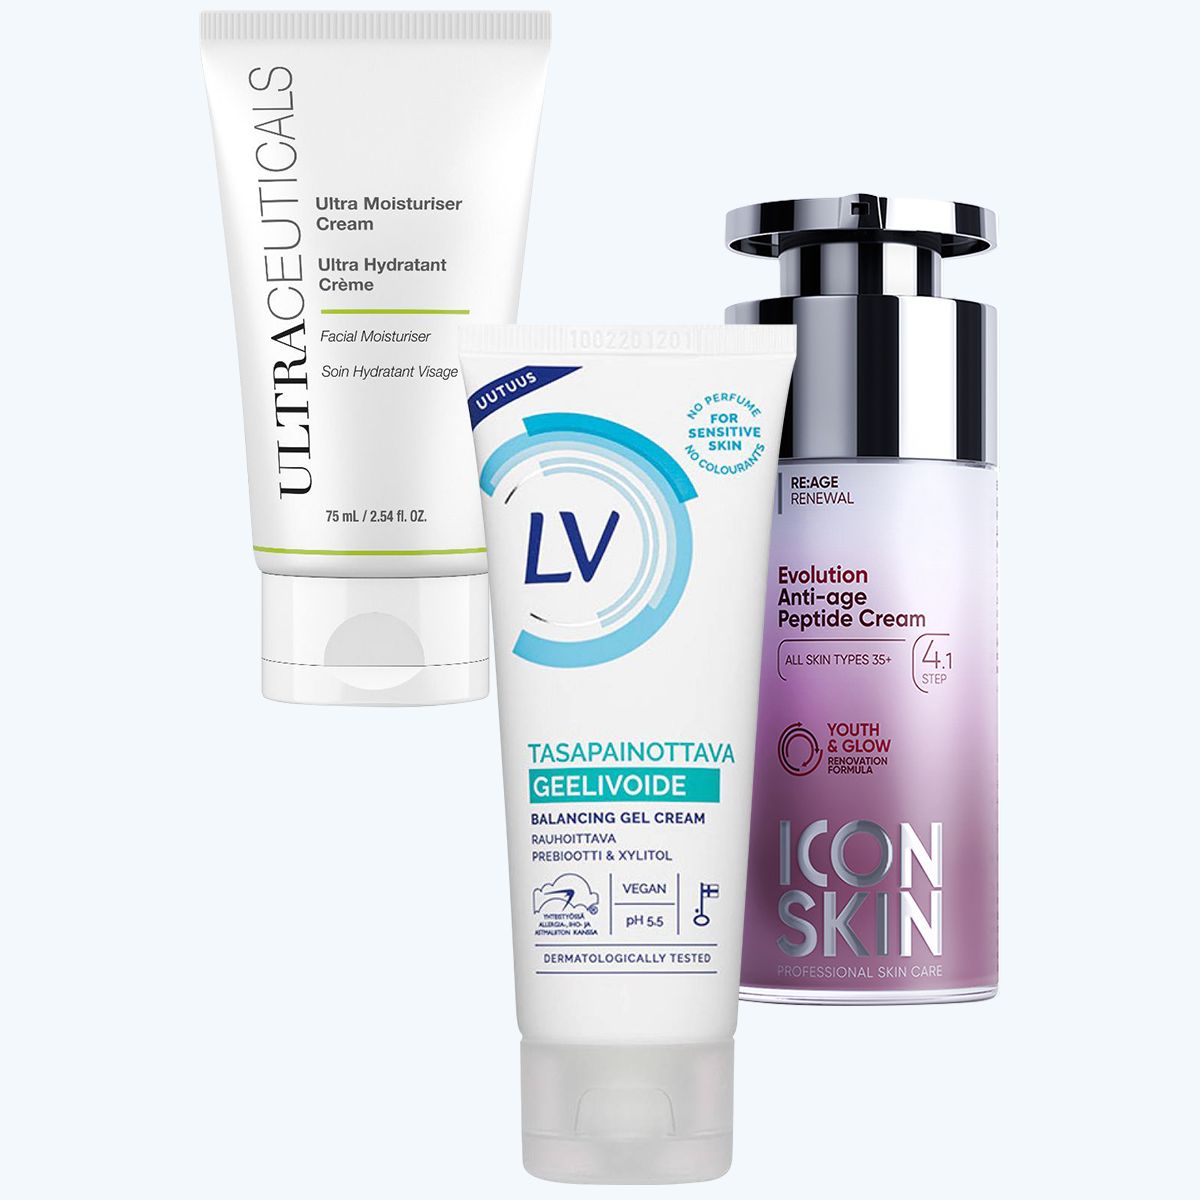 UltraCeuticals Ultra Moisturiser Cream, LV Balancing Face Gel-cream For sensitive skin, Icon Skin Evolution Anti-age Peptide Cream